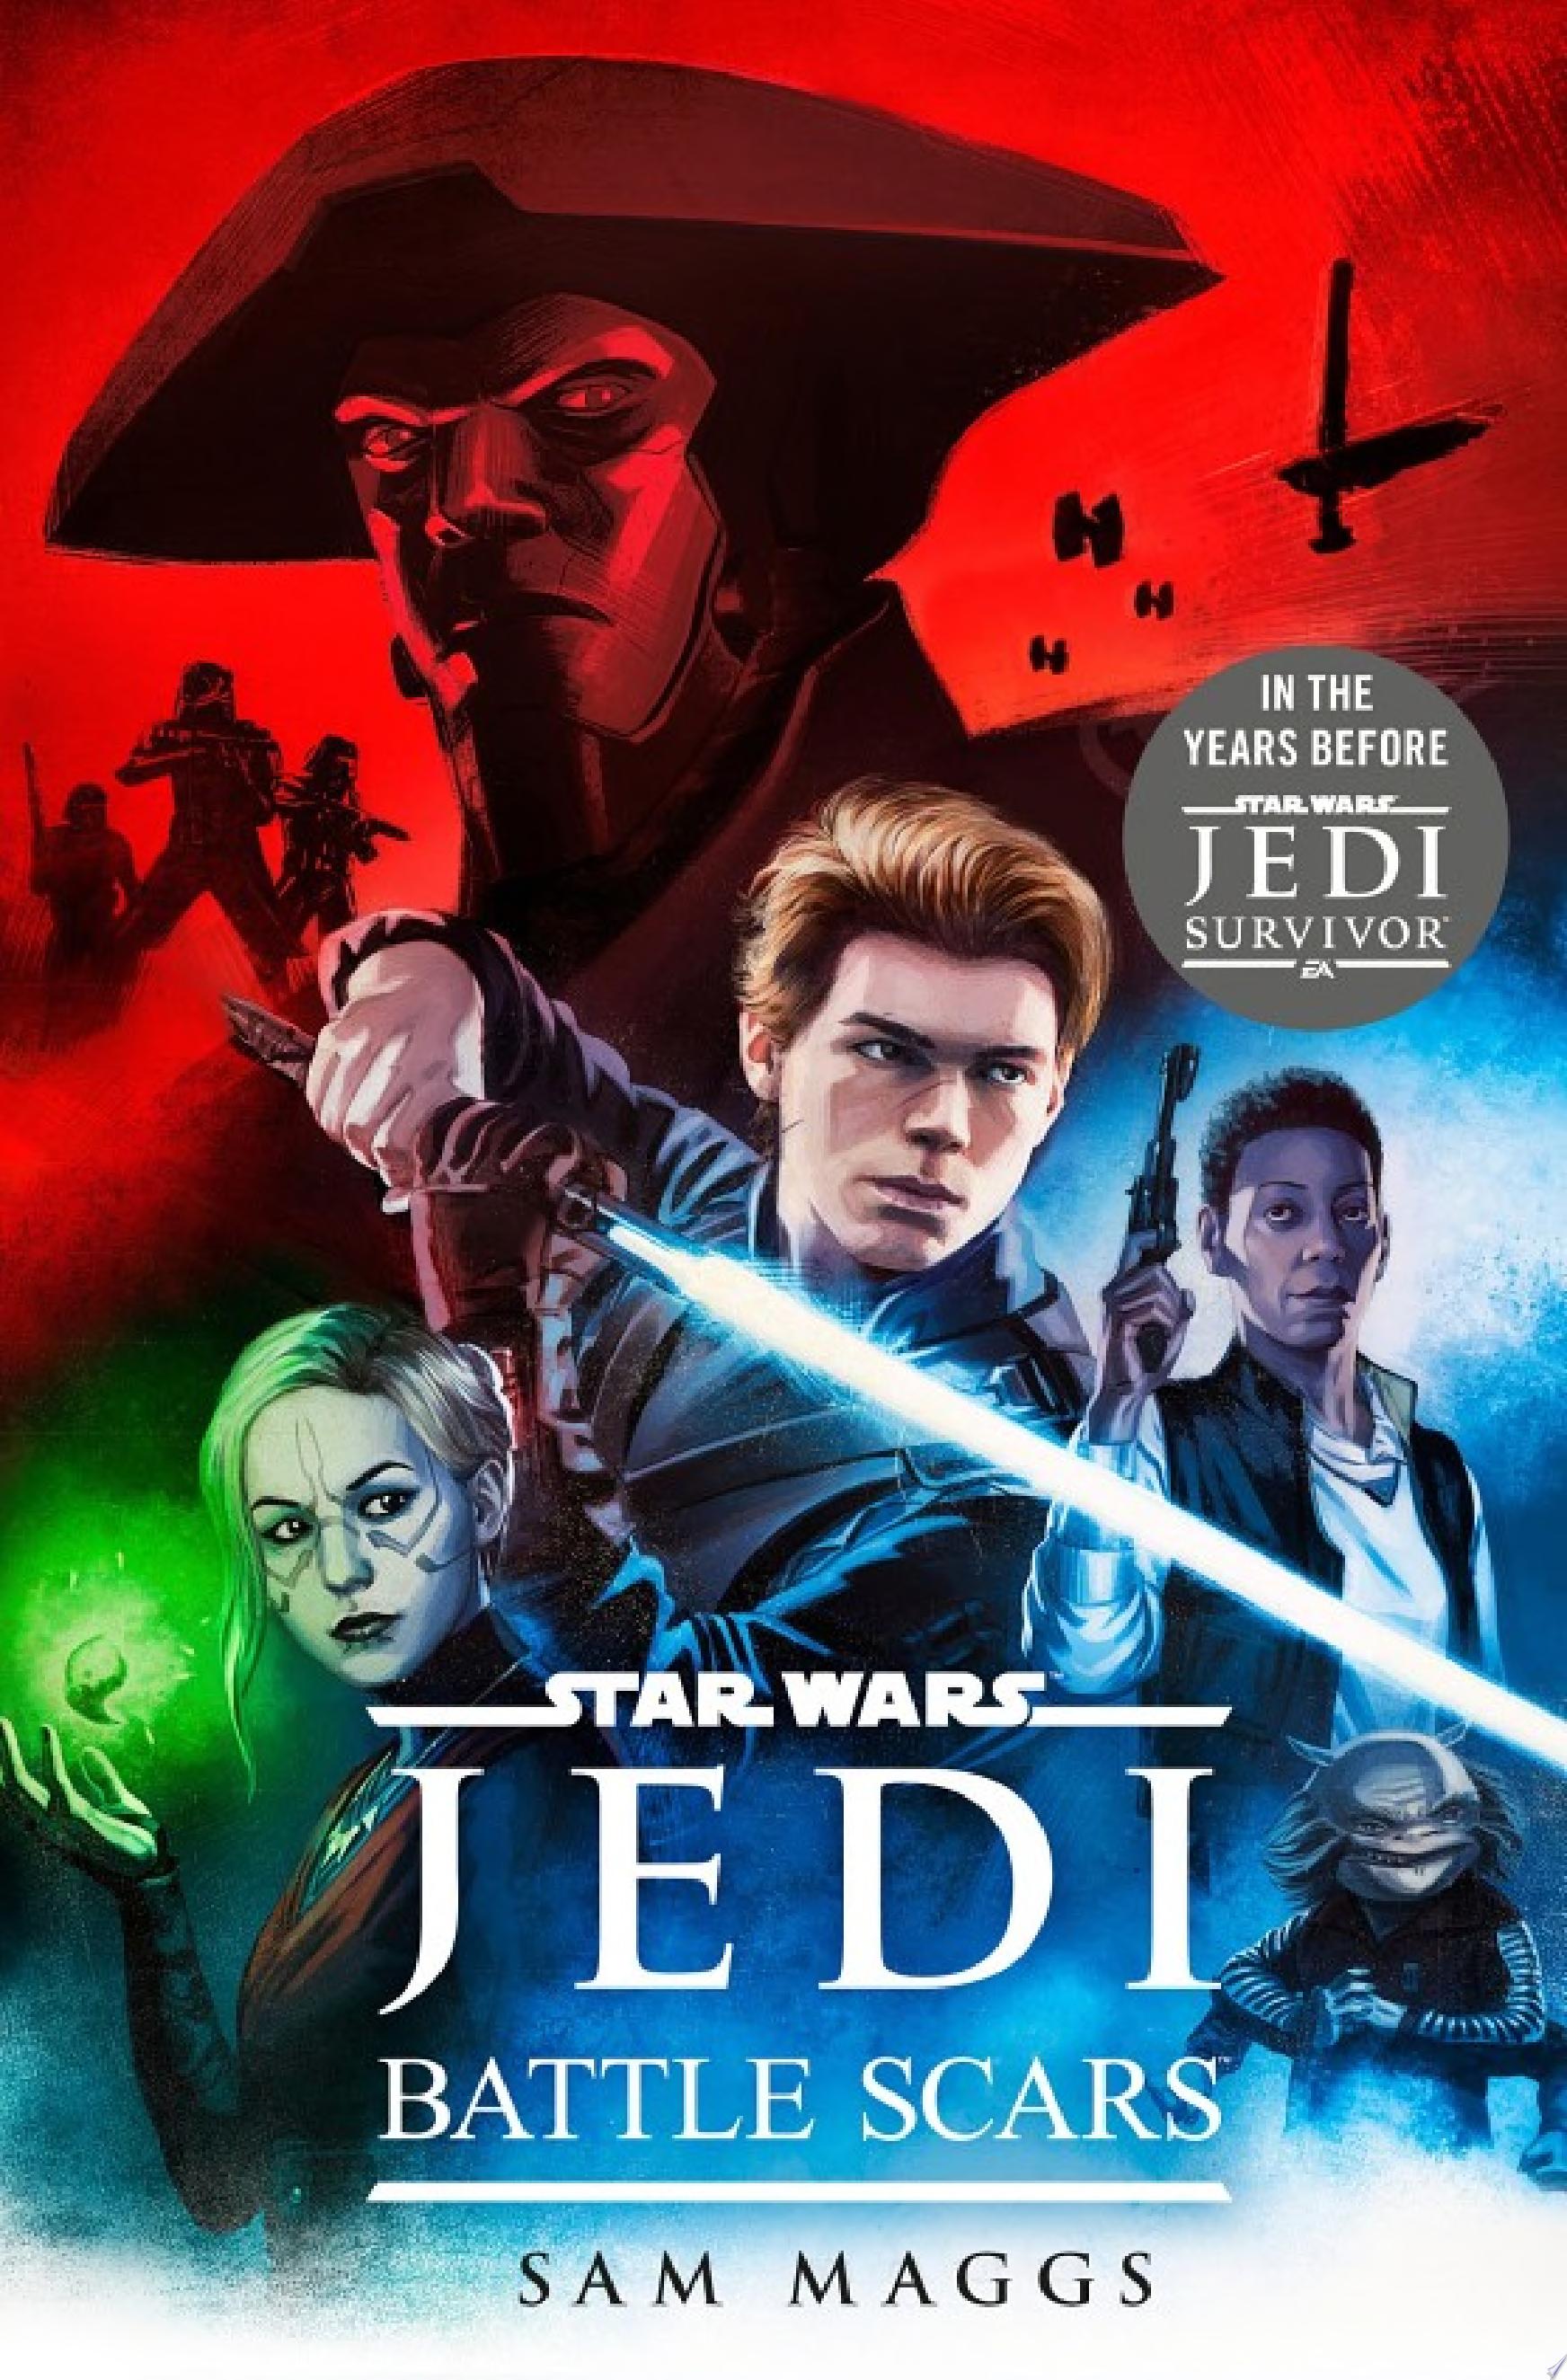 Image for "Star Wars Jedi: Battle Scars"